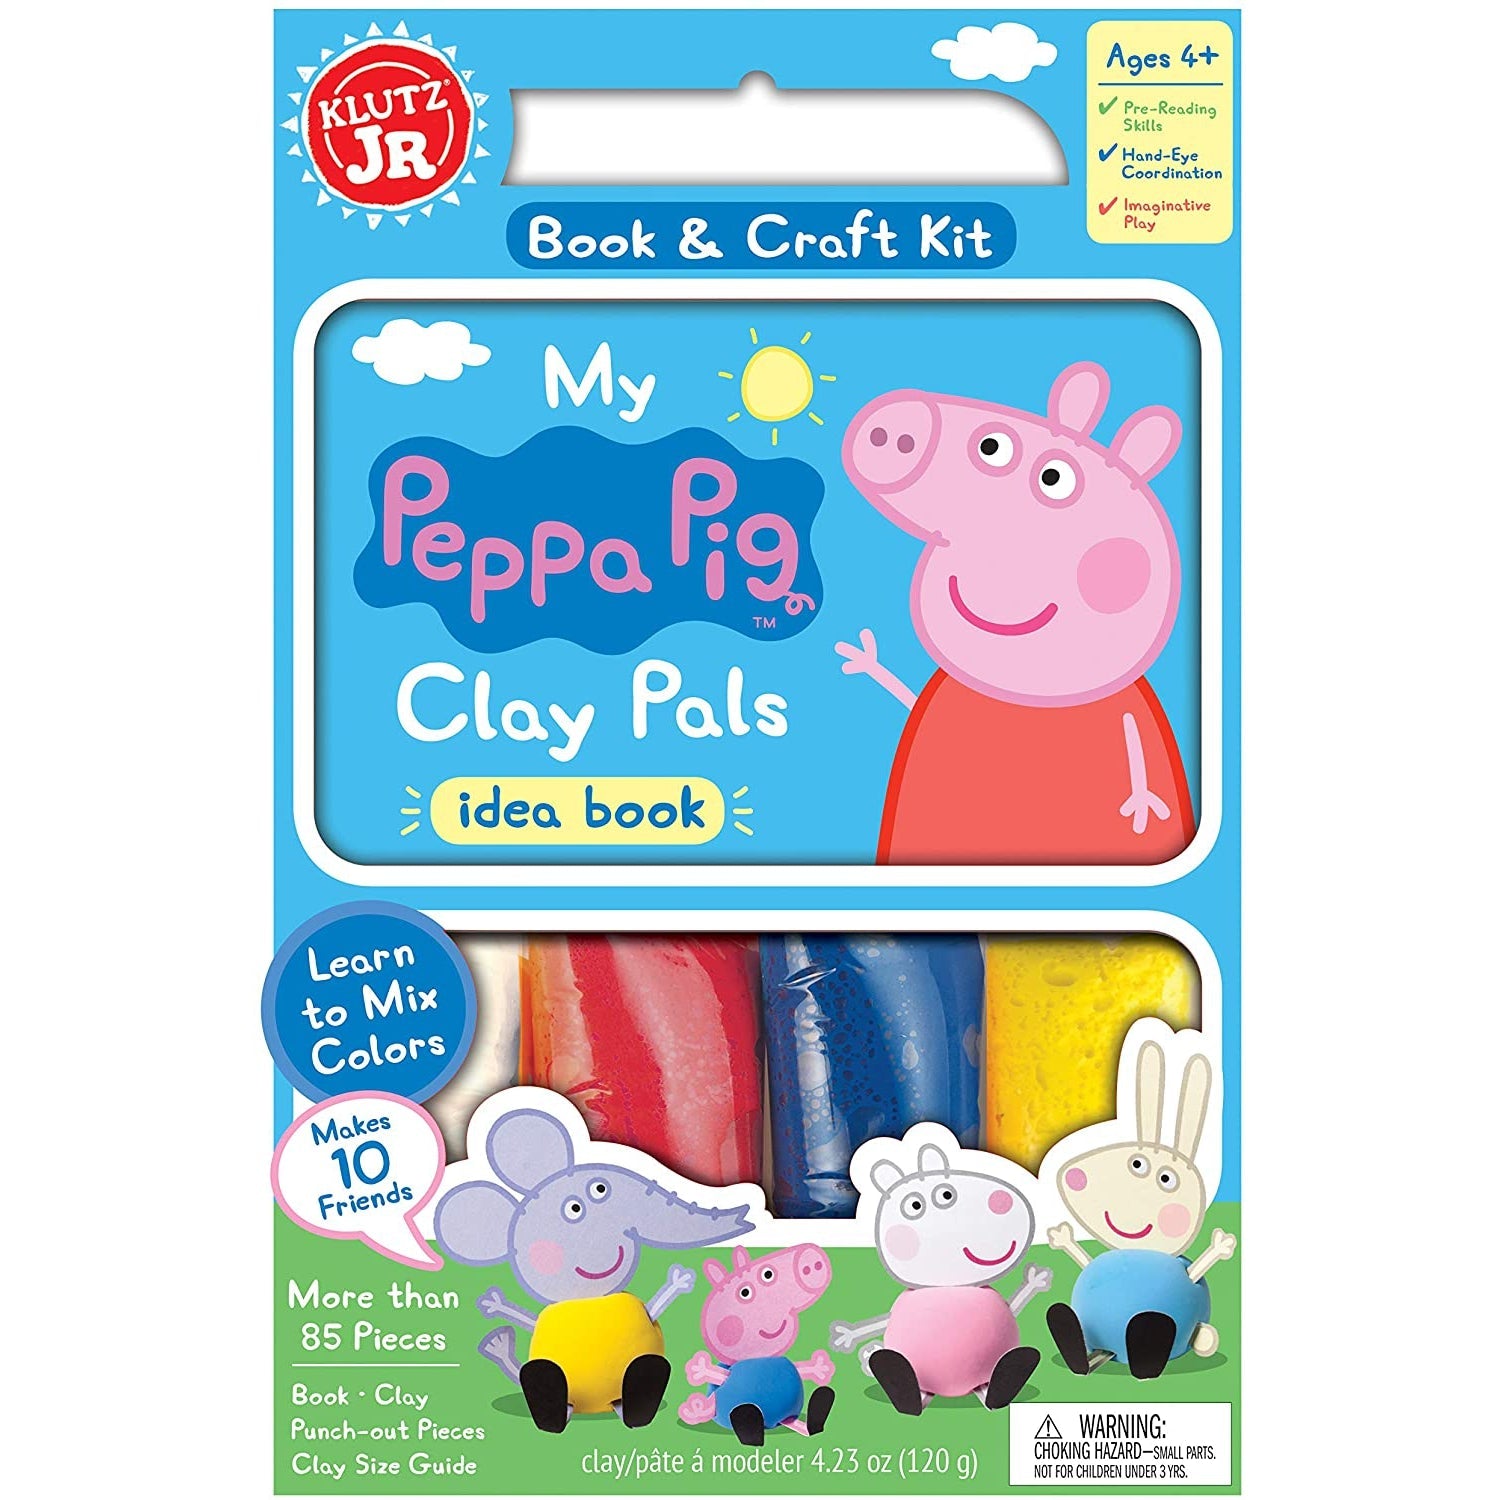 Klutz My Peppa Pig Clay Pals Jr. Craft Kit - Makes 10 Friends